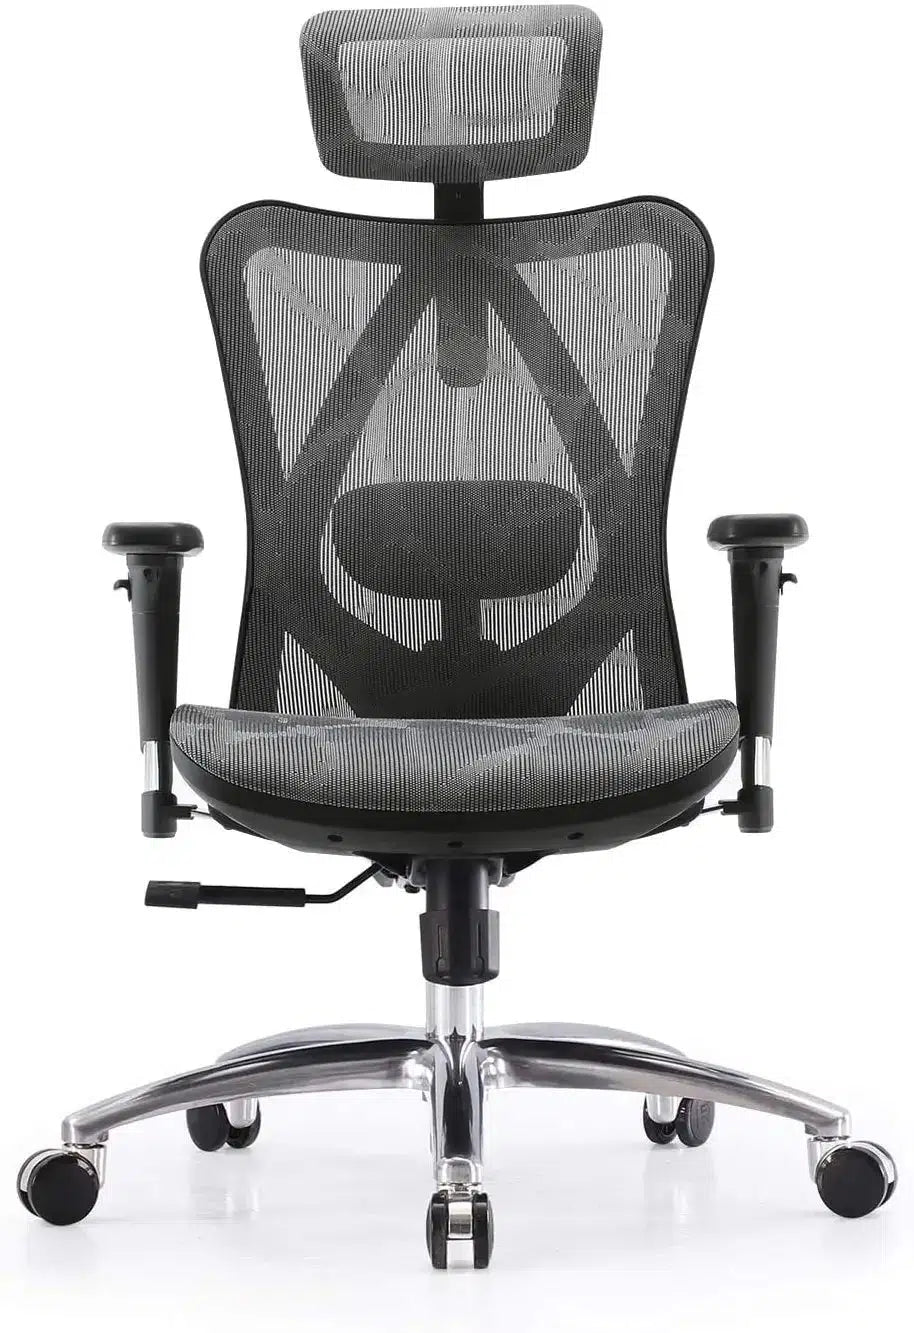 Sihoo M18 Ergonomic Chair